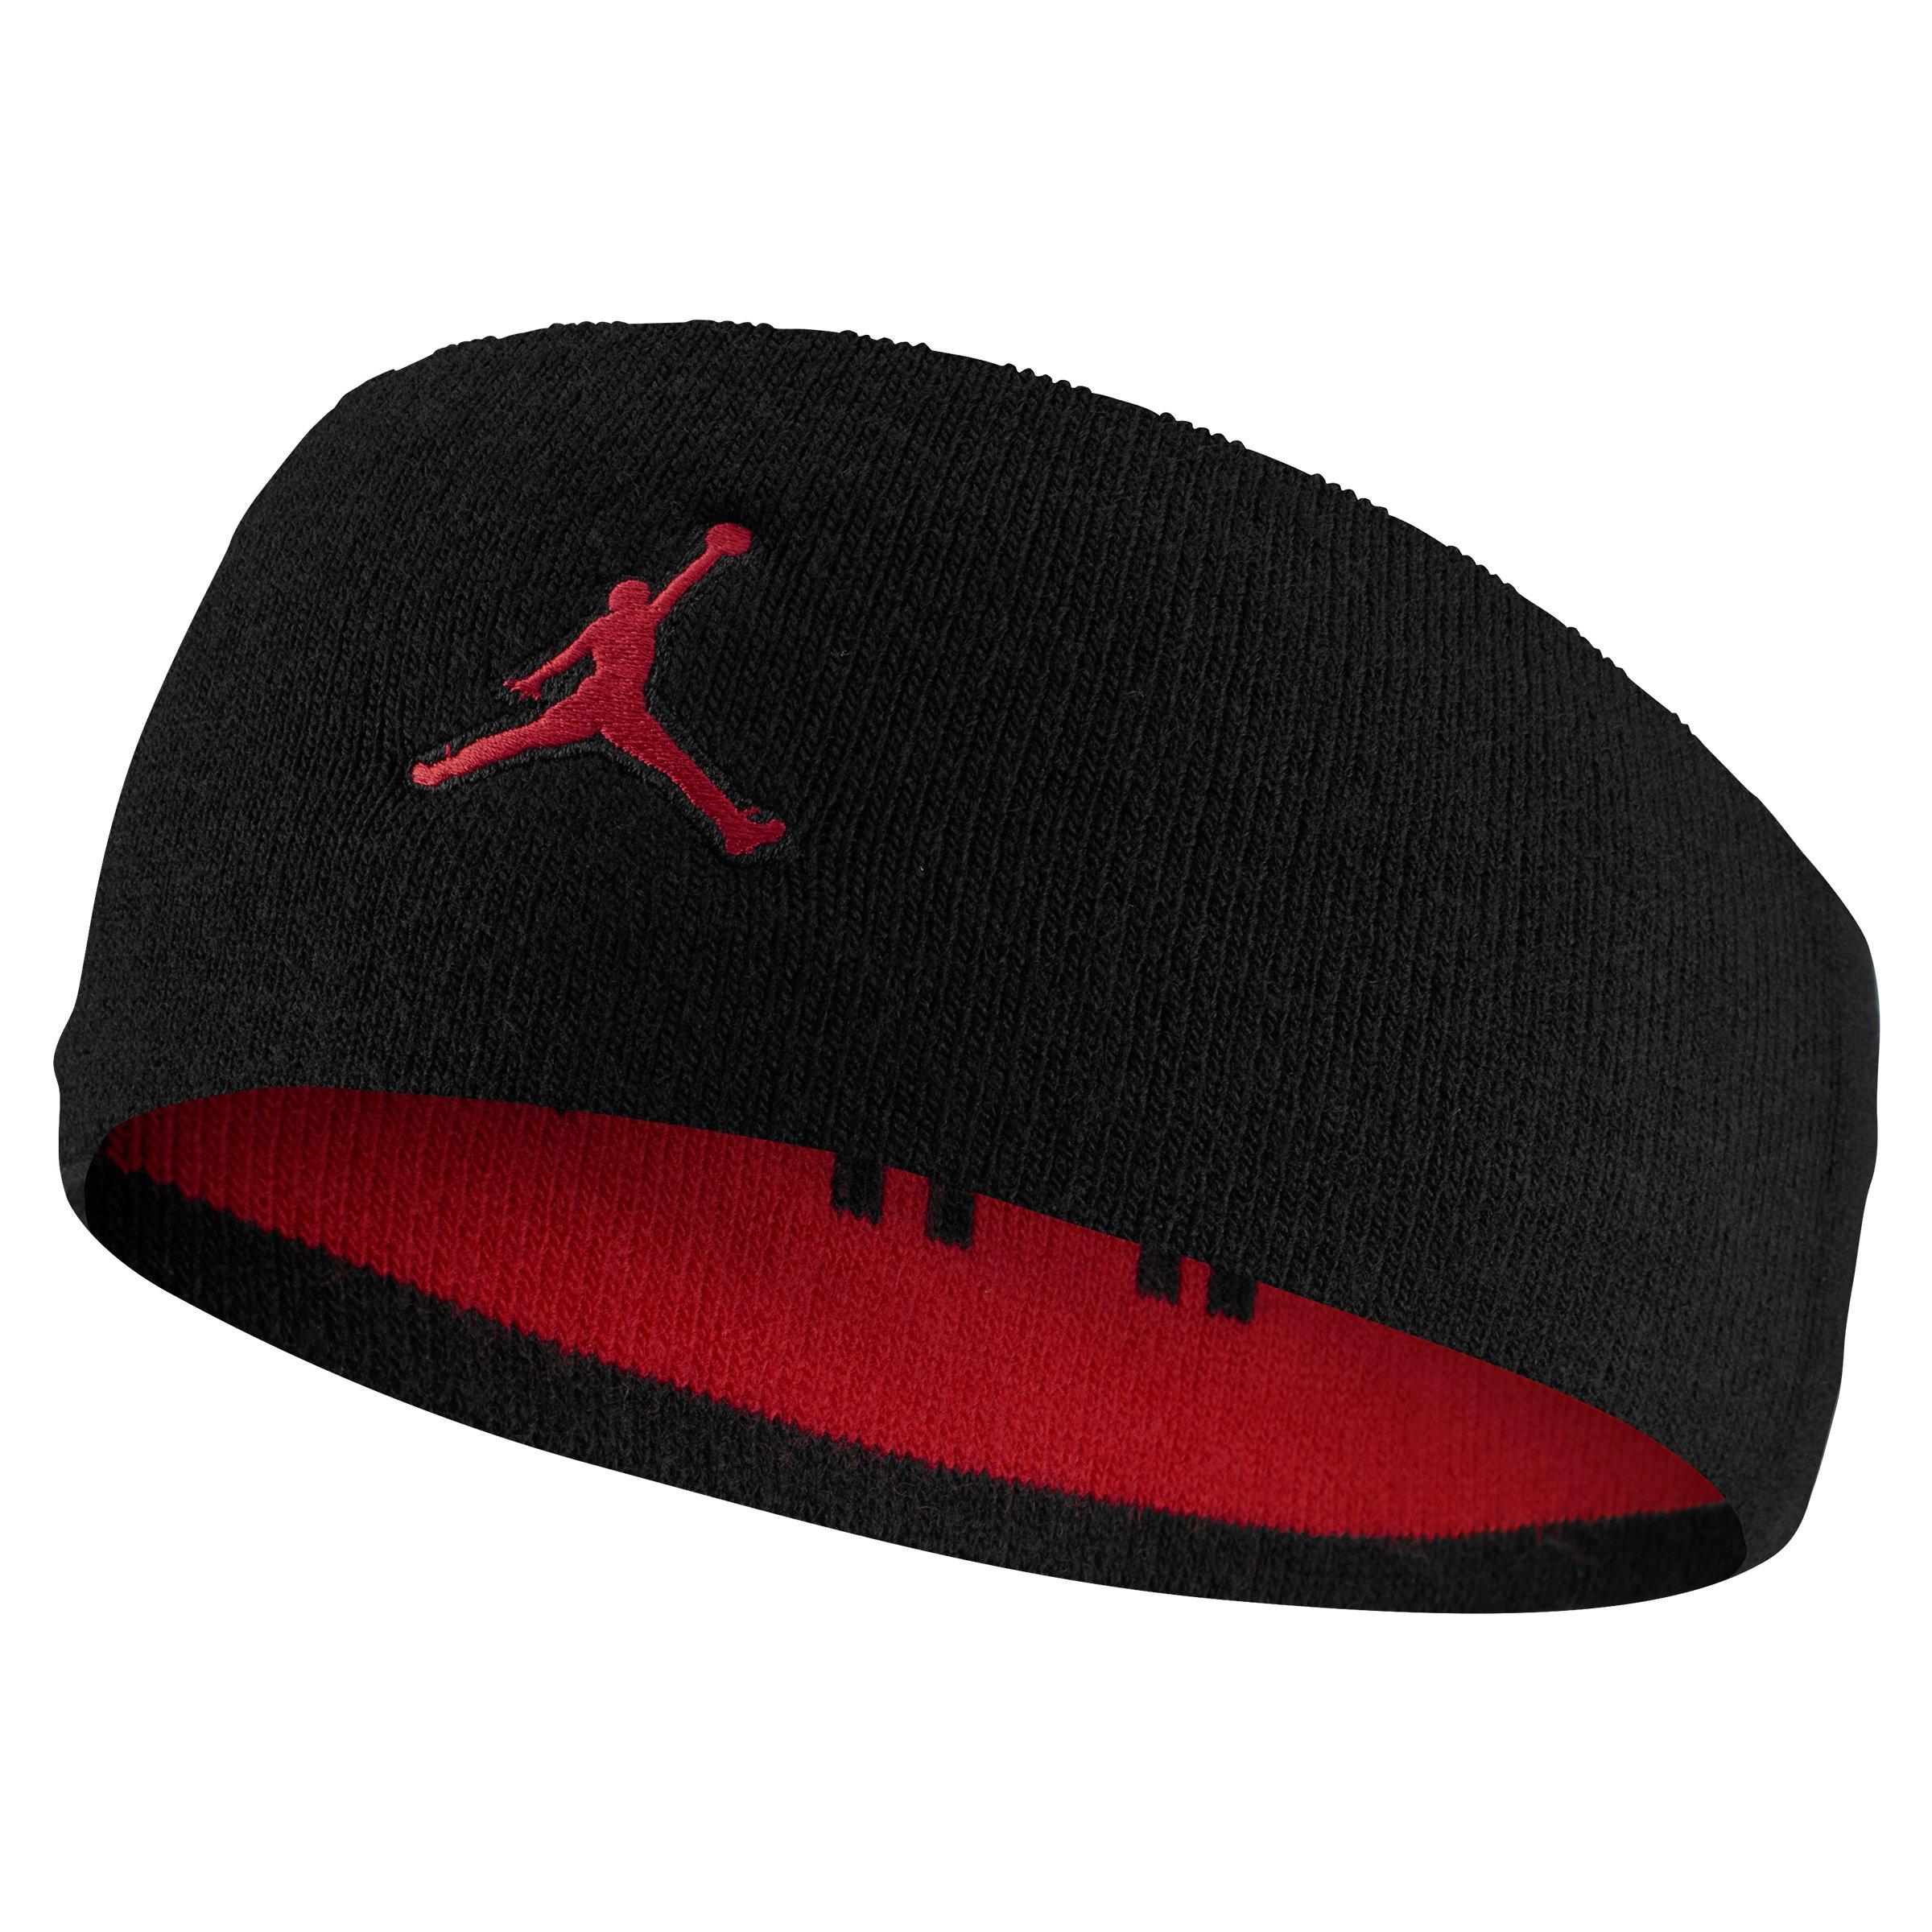 Jordan Knit Reversible Headband-Black/Red